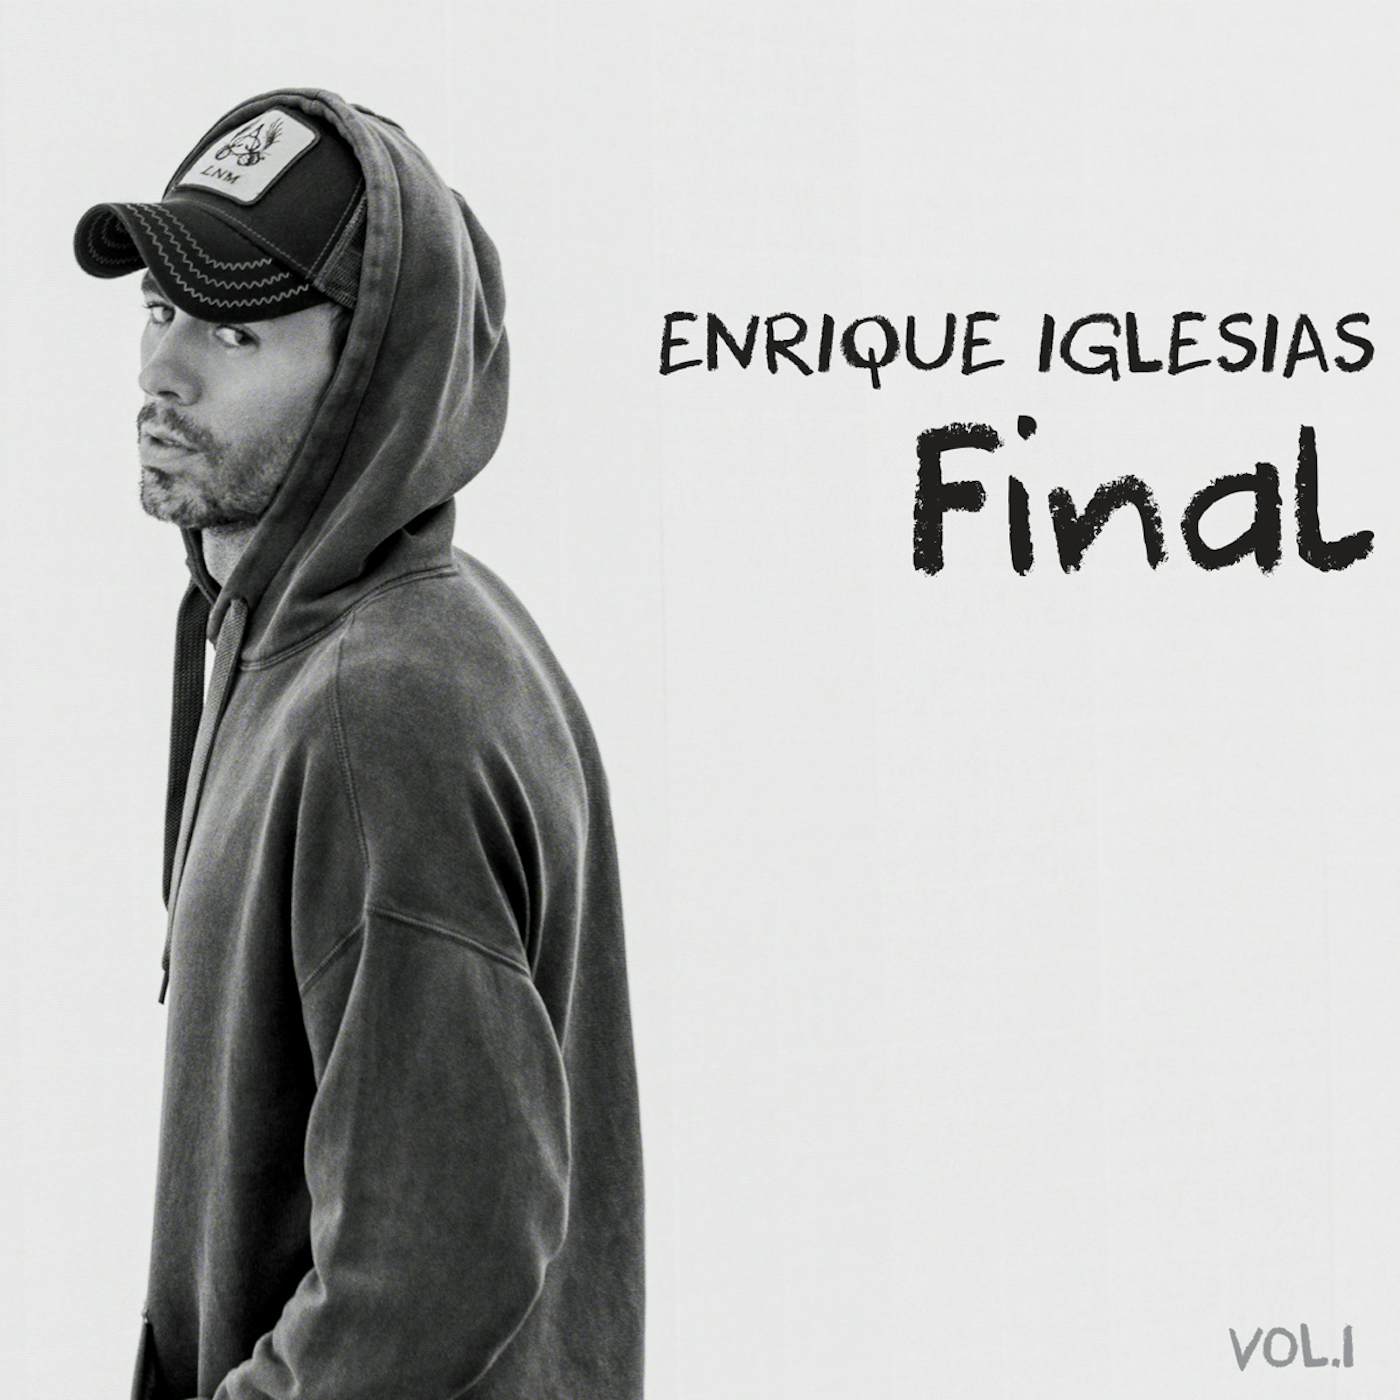 Enrique Iglesias Final Vol. 1